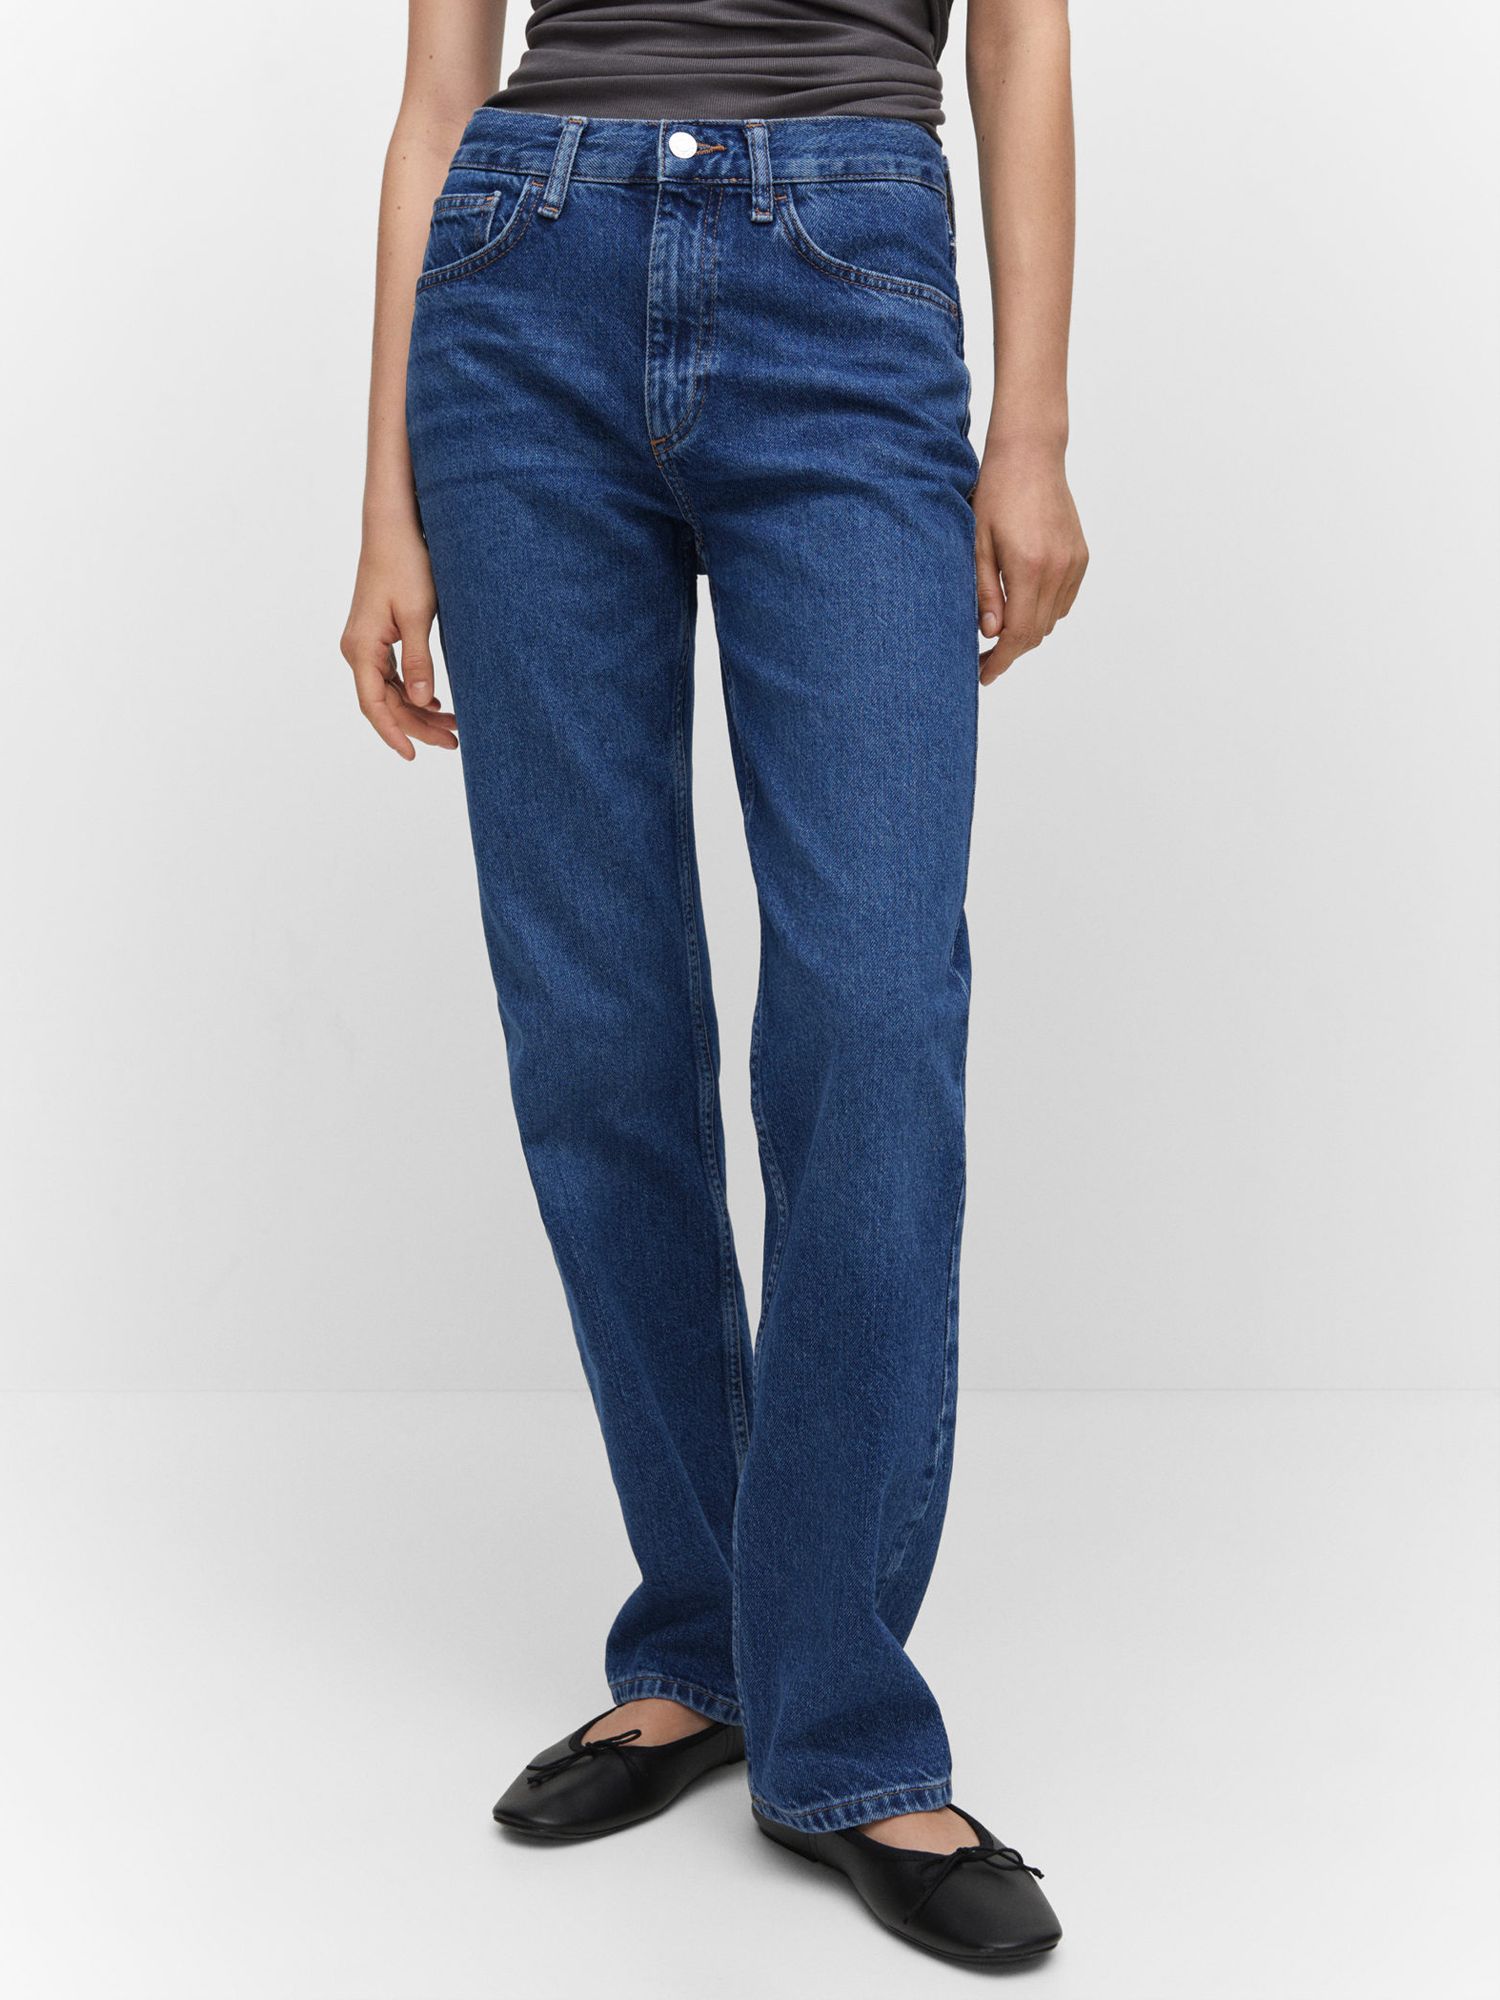 Mango Matilda Mid Rise Straight Jeans, Mid Blue at John Lewis & Partners